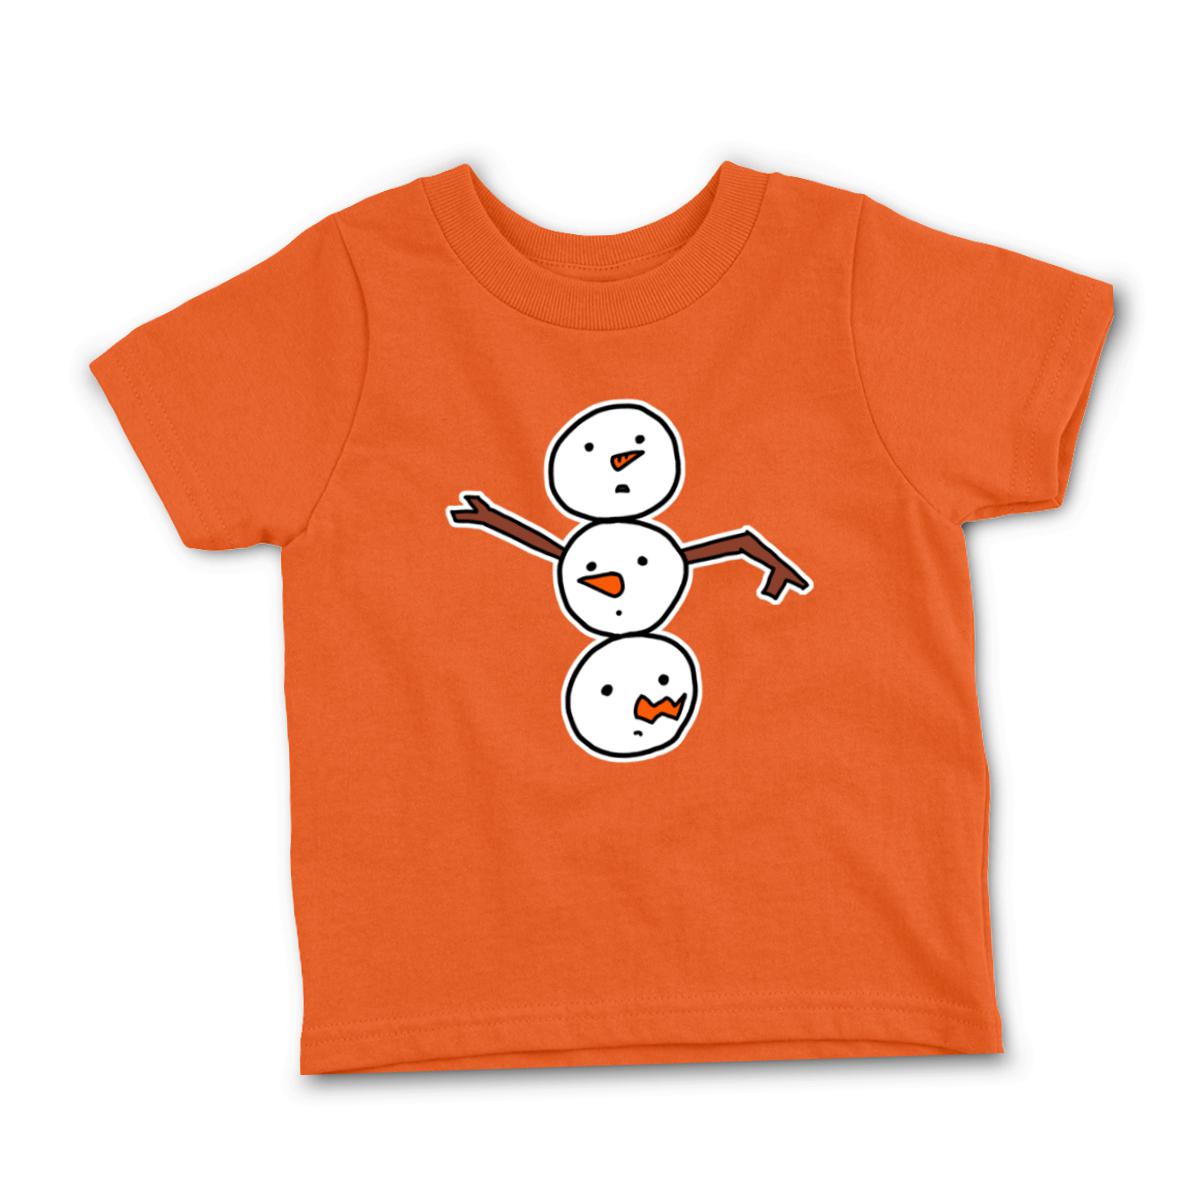 Snowman All Heads Infant Tee 12M orange